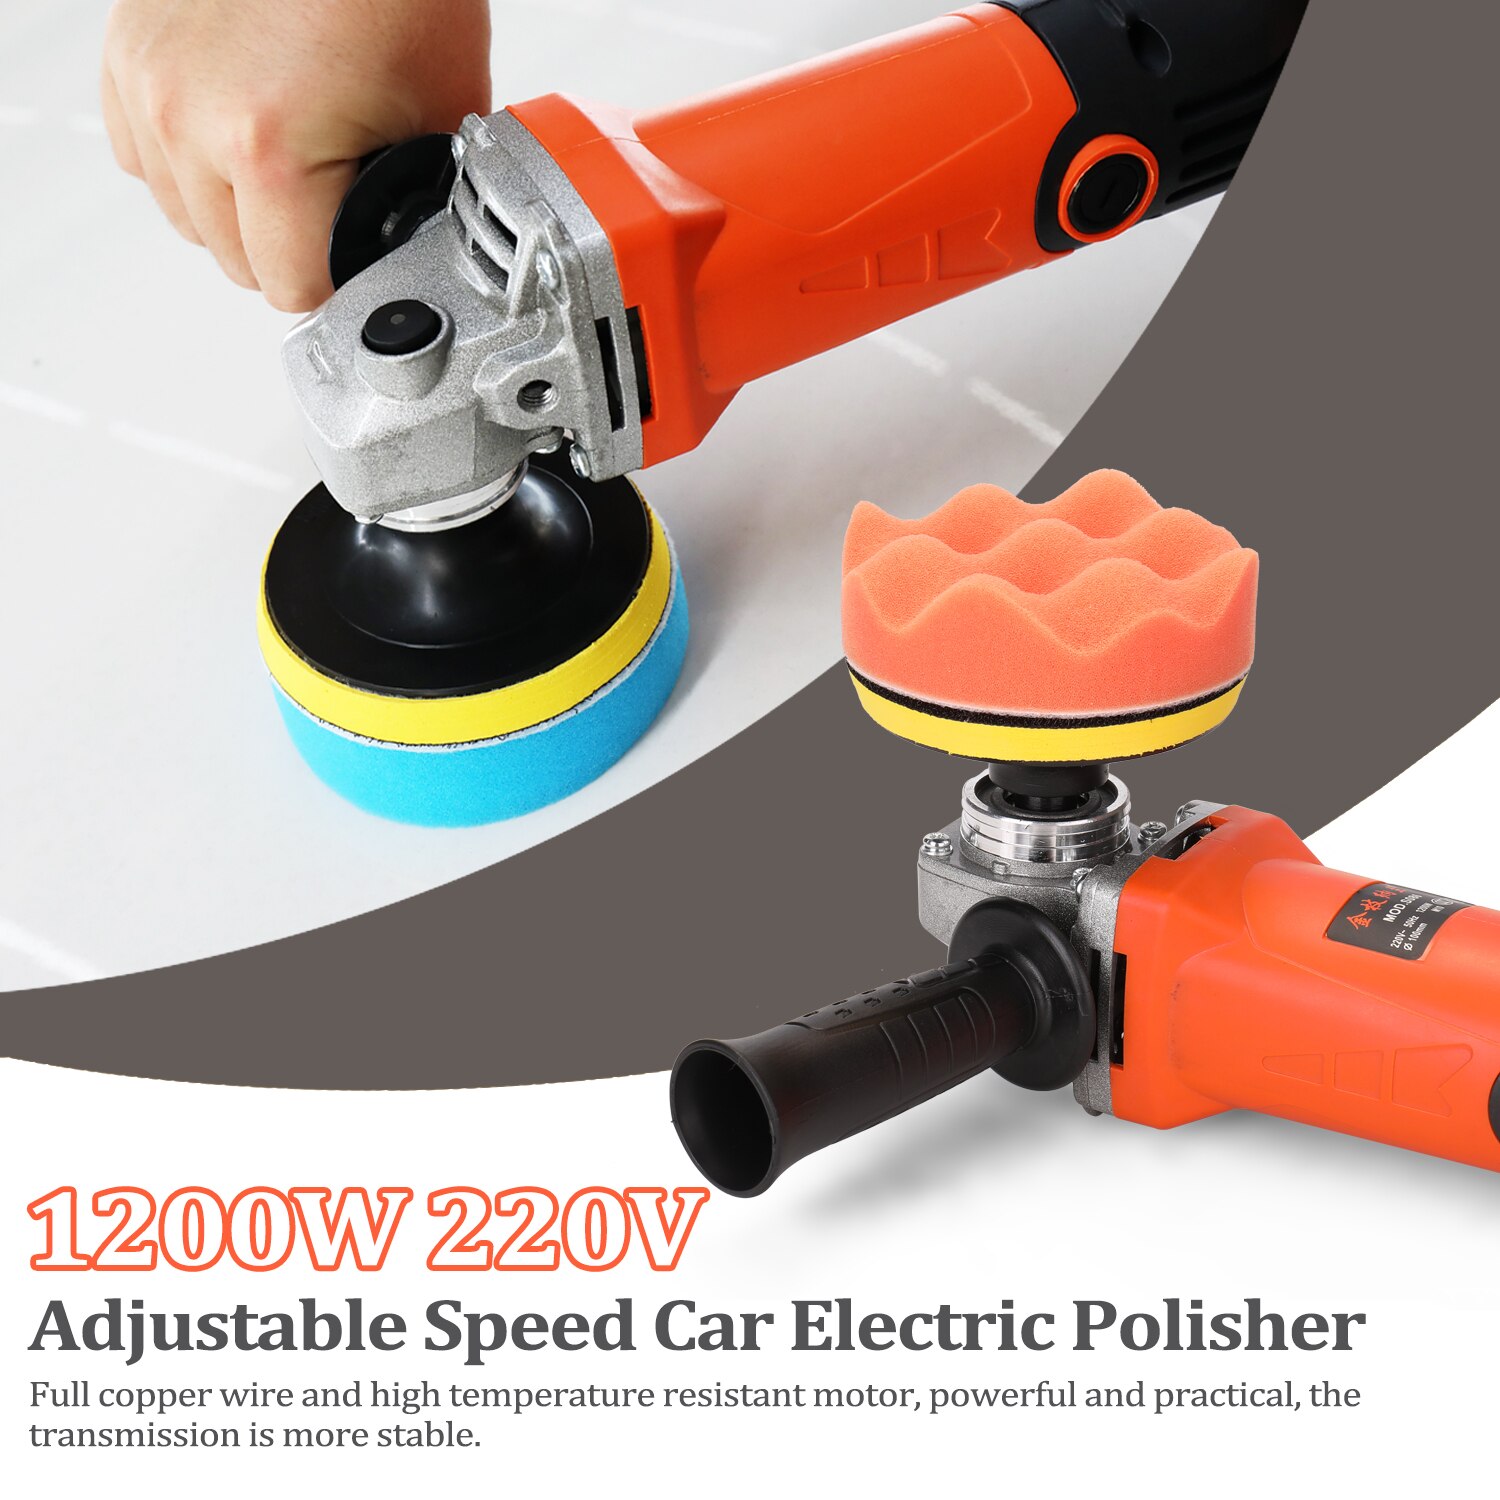 1200W 220V 8000r/min 6 gears Adjustable Speed polisher Car Electric Polisher Waxing Machine Automobile Furniture Polishing Tool